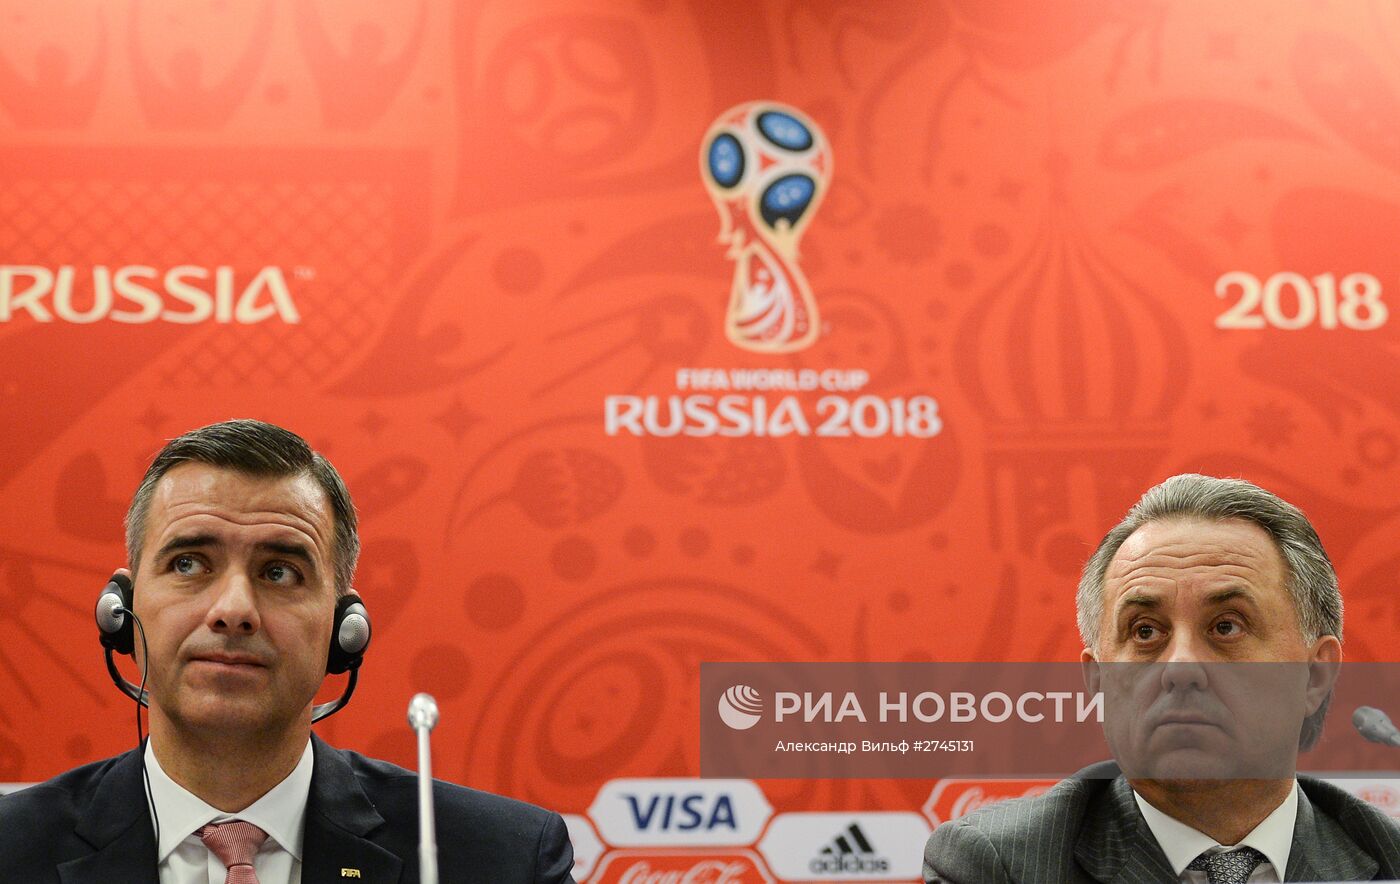 Пресс-брифинг по итогам заседания совета оргкомитета "Россия-2018" при участии ФИФА